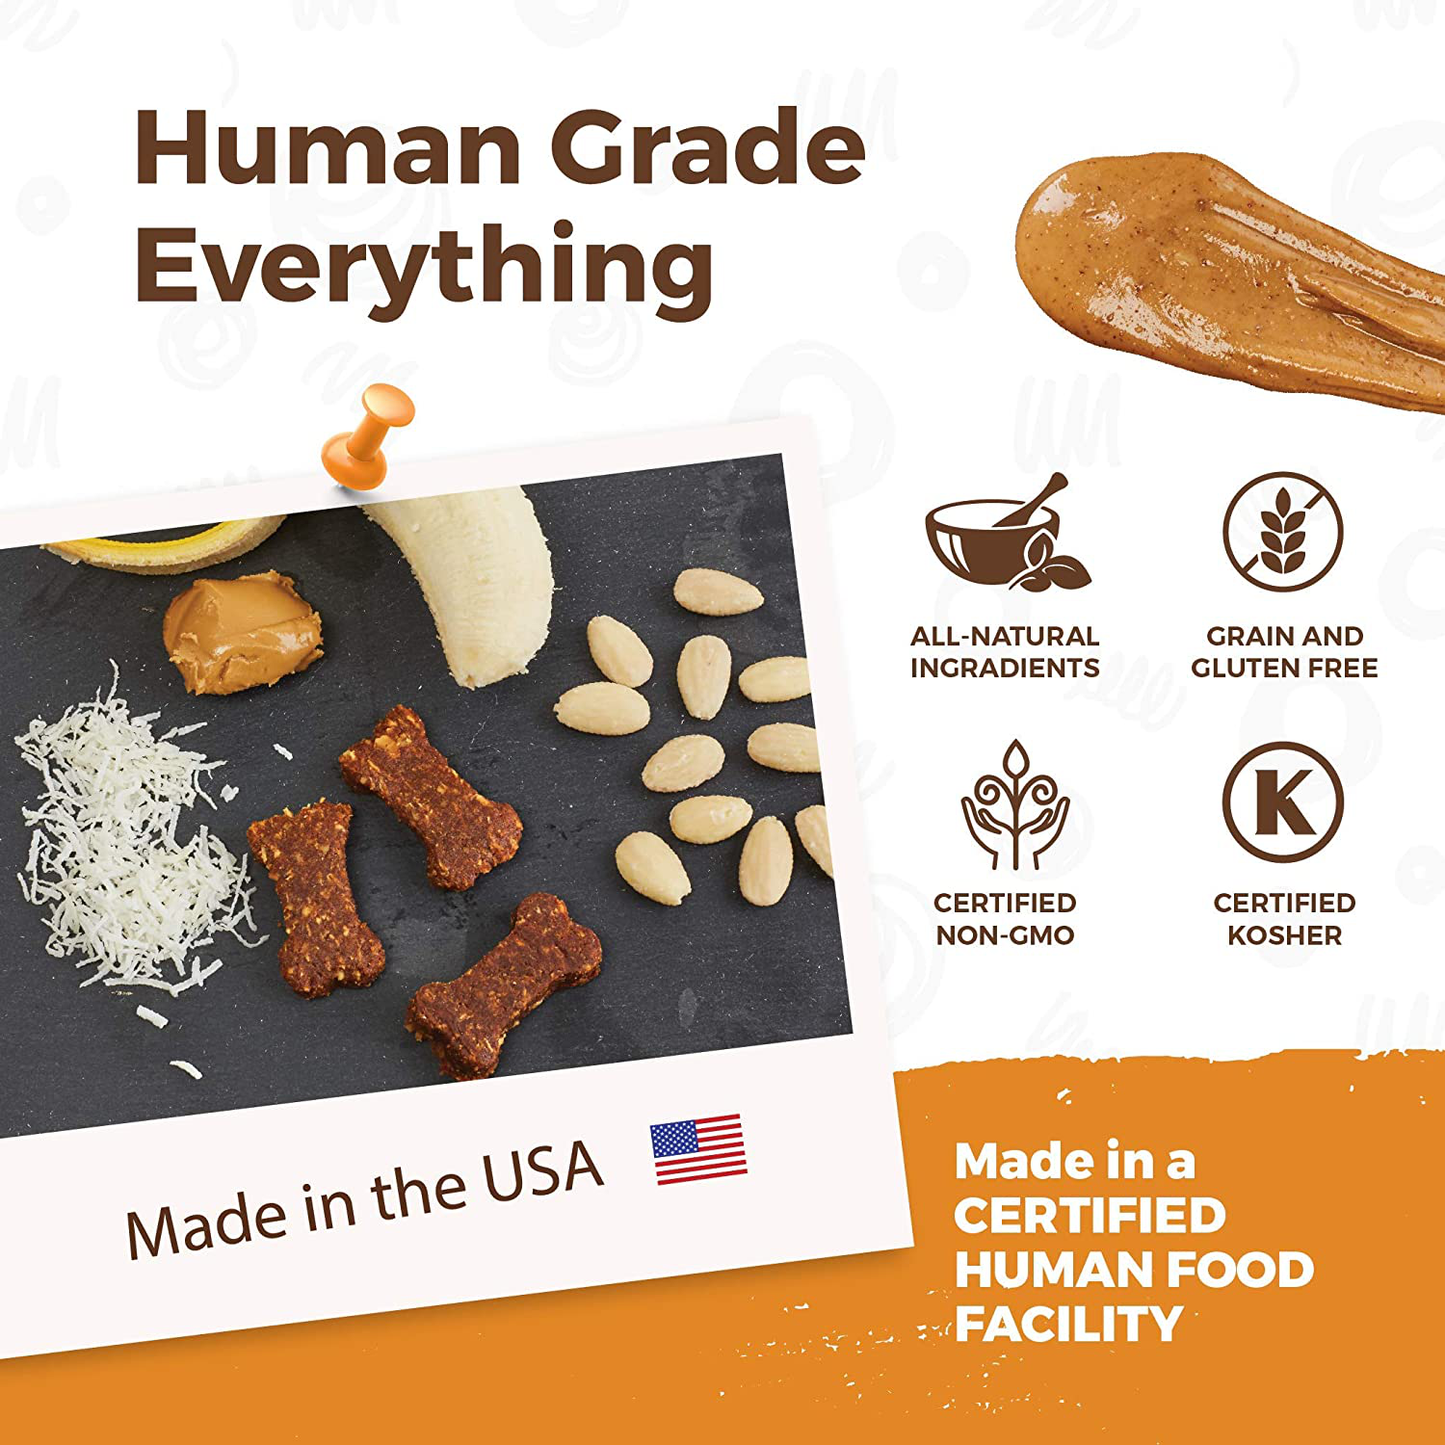 Petmio Bites Naturals. Banana Almond Butter Dog Treat. All-Natural. Human-Grade. Grain-Free. Gluten-Free. Made in USA. Kosher.